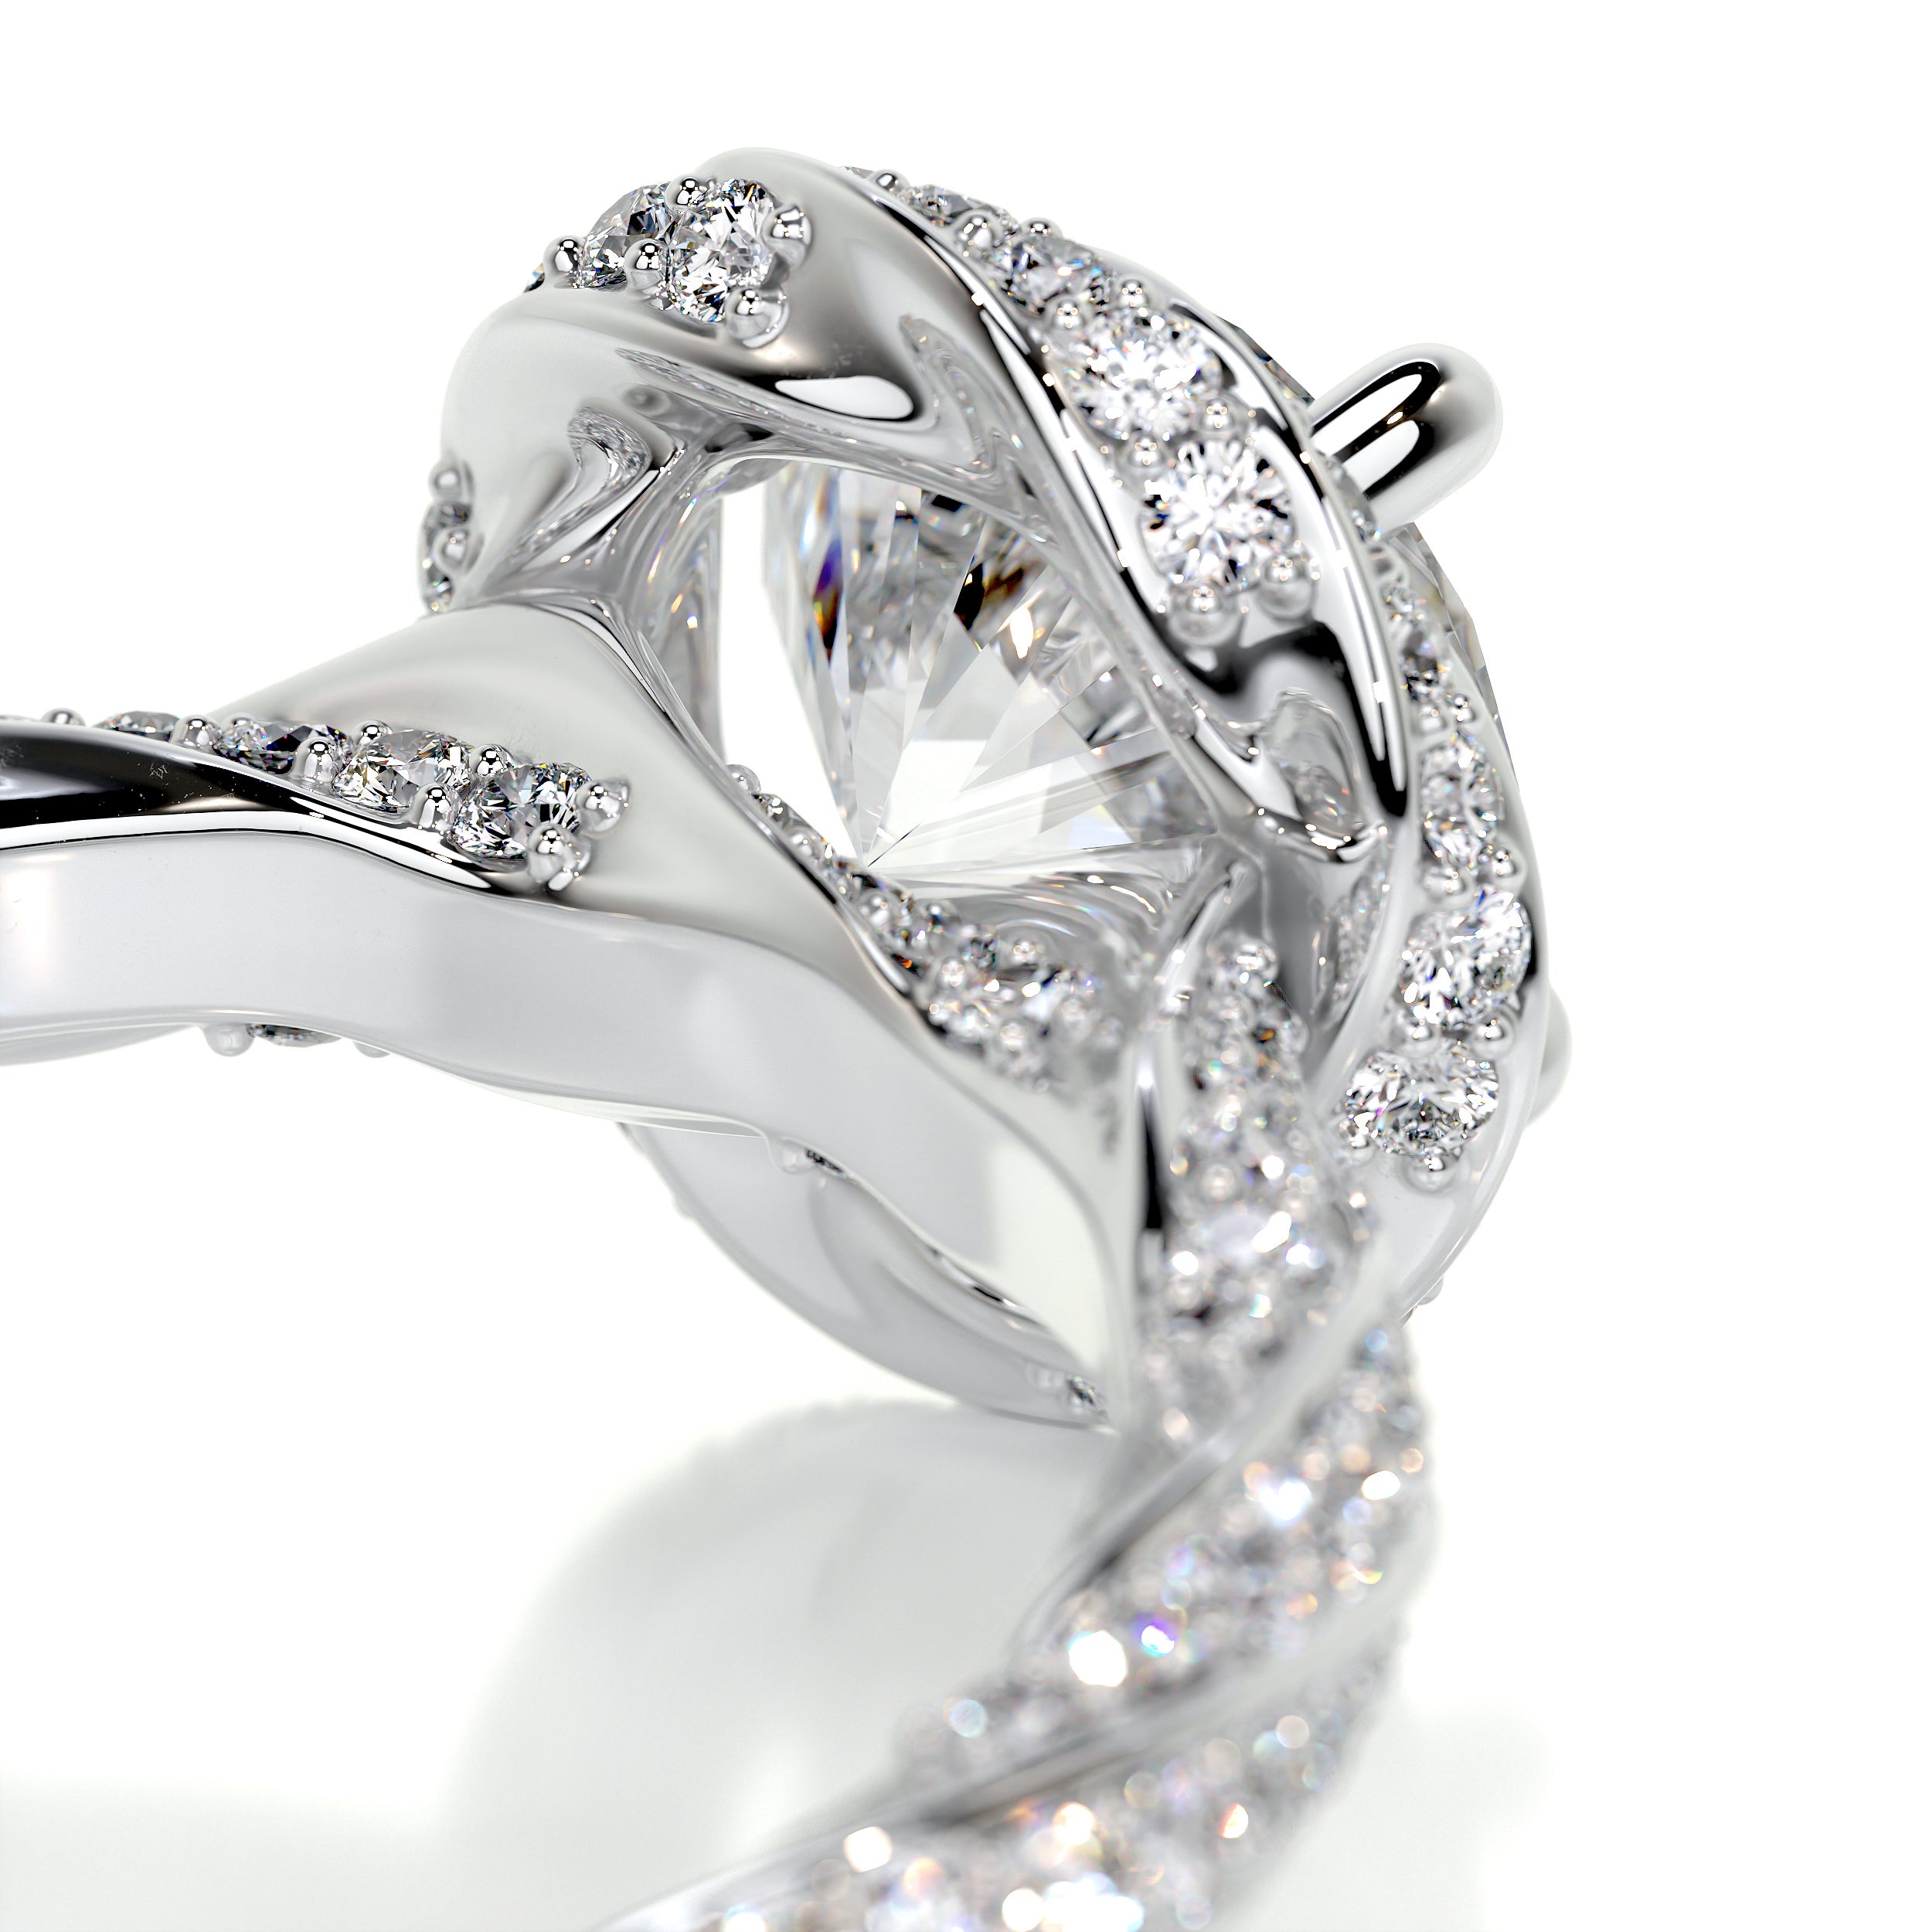 Joanne Diamond Engagement Ring   (1.50 Carat) -18K White Gold